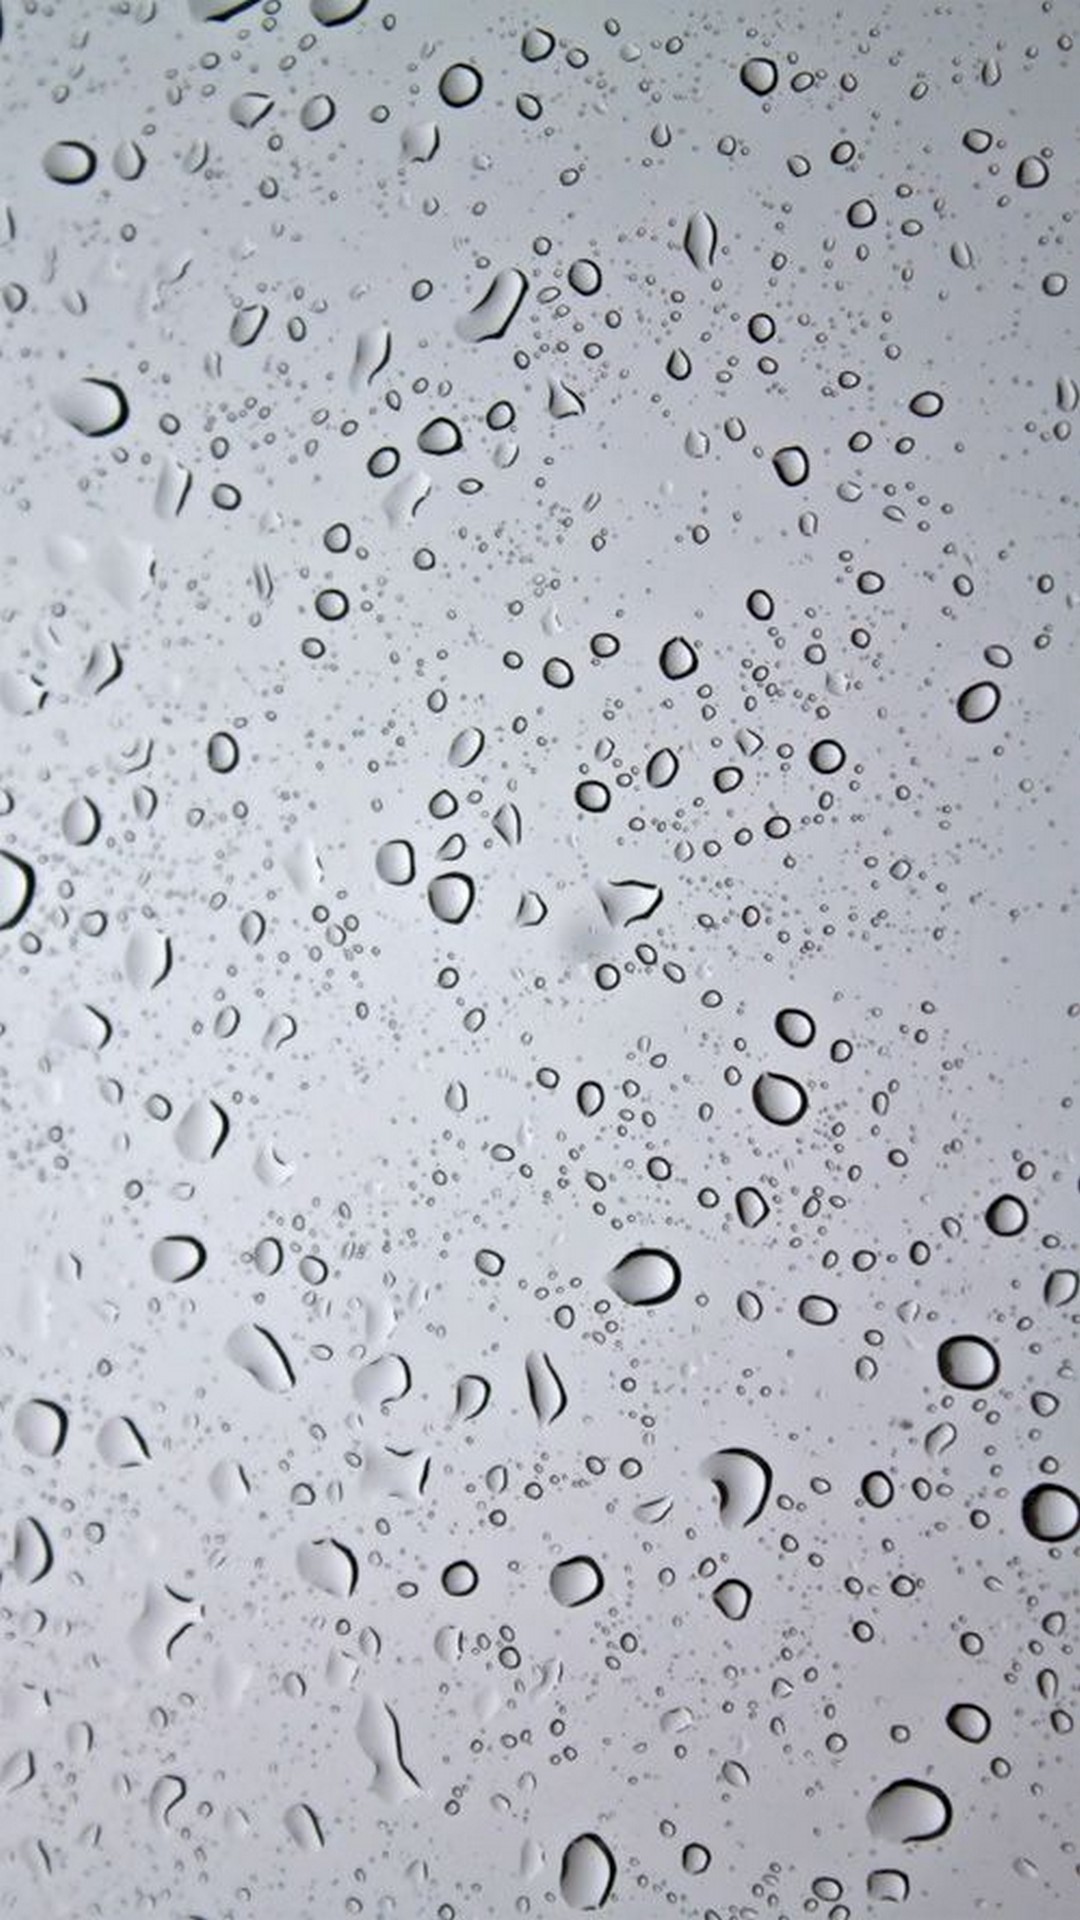 iPhone Raindrops Wallpaper resolution 1080x1920